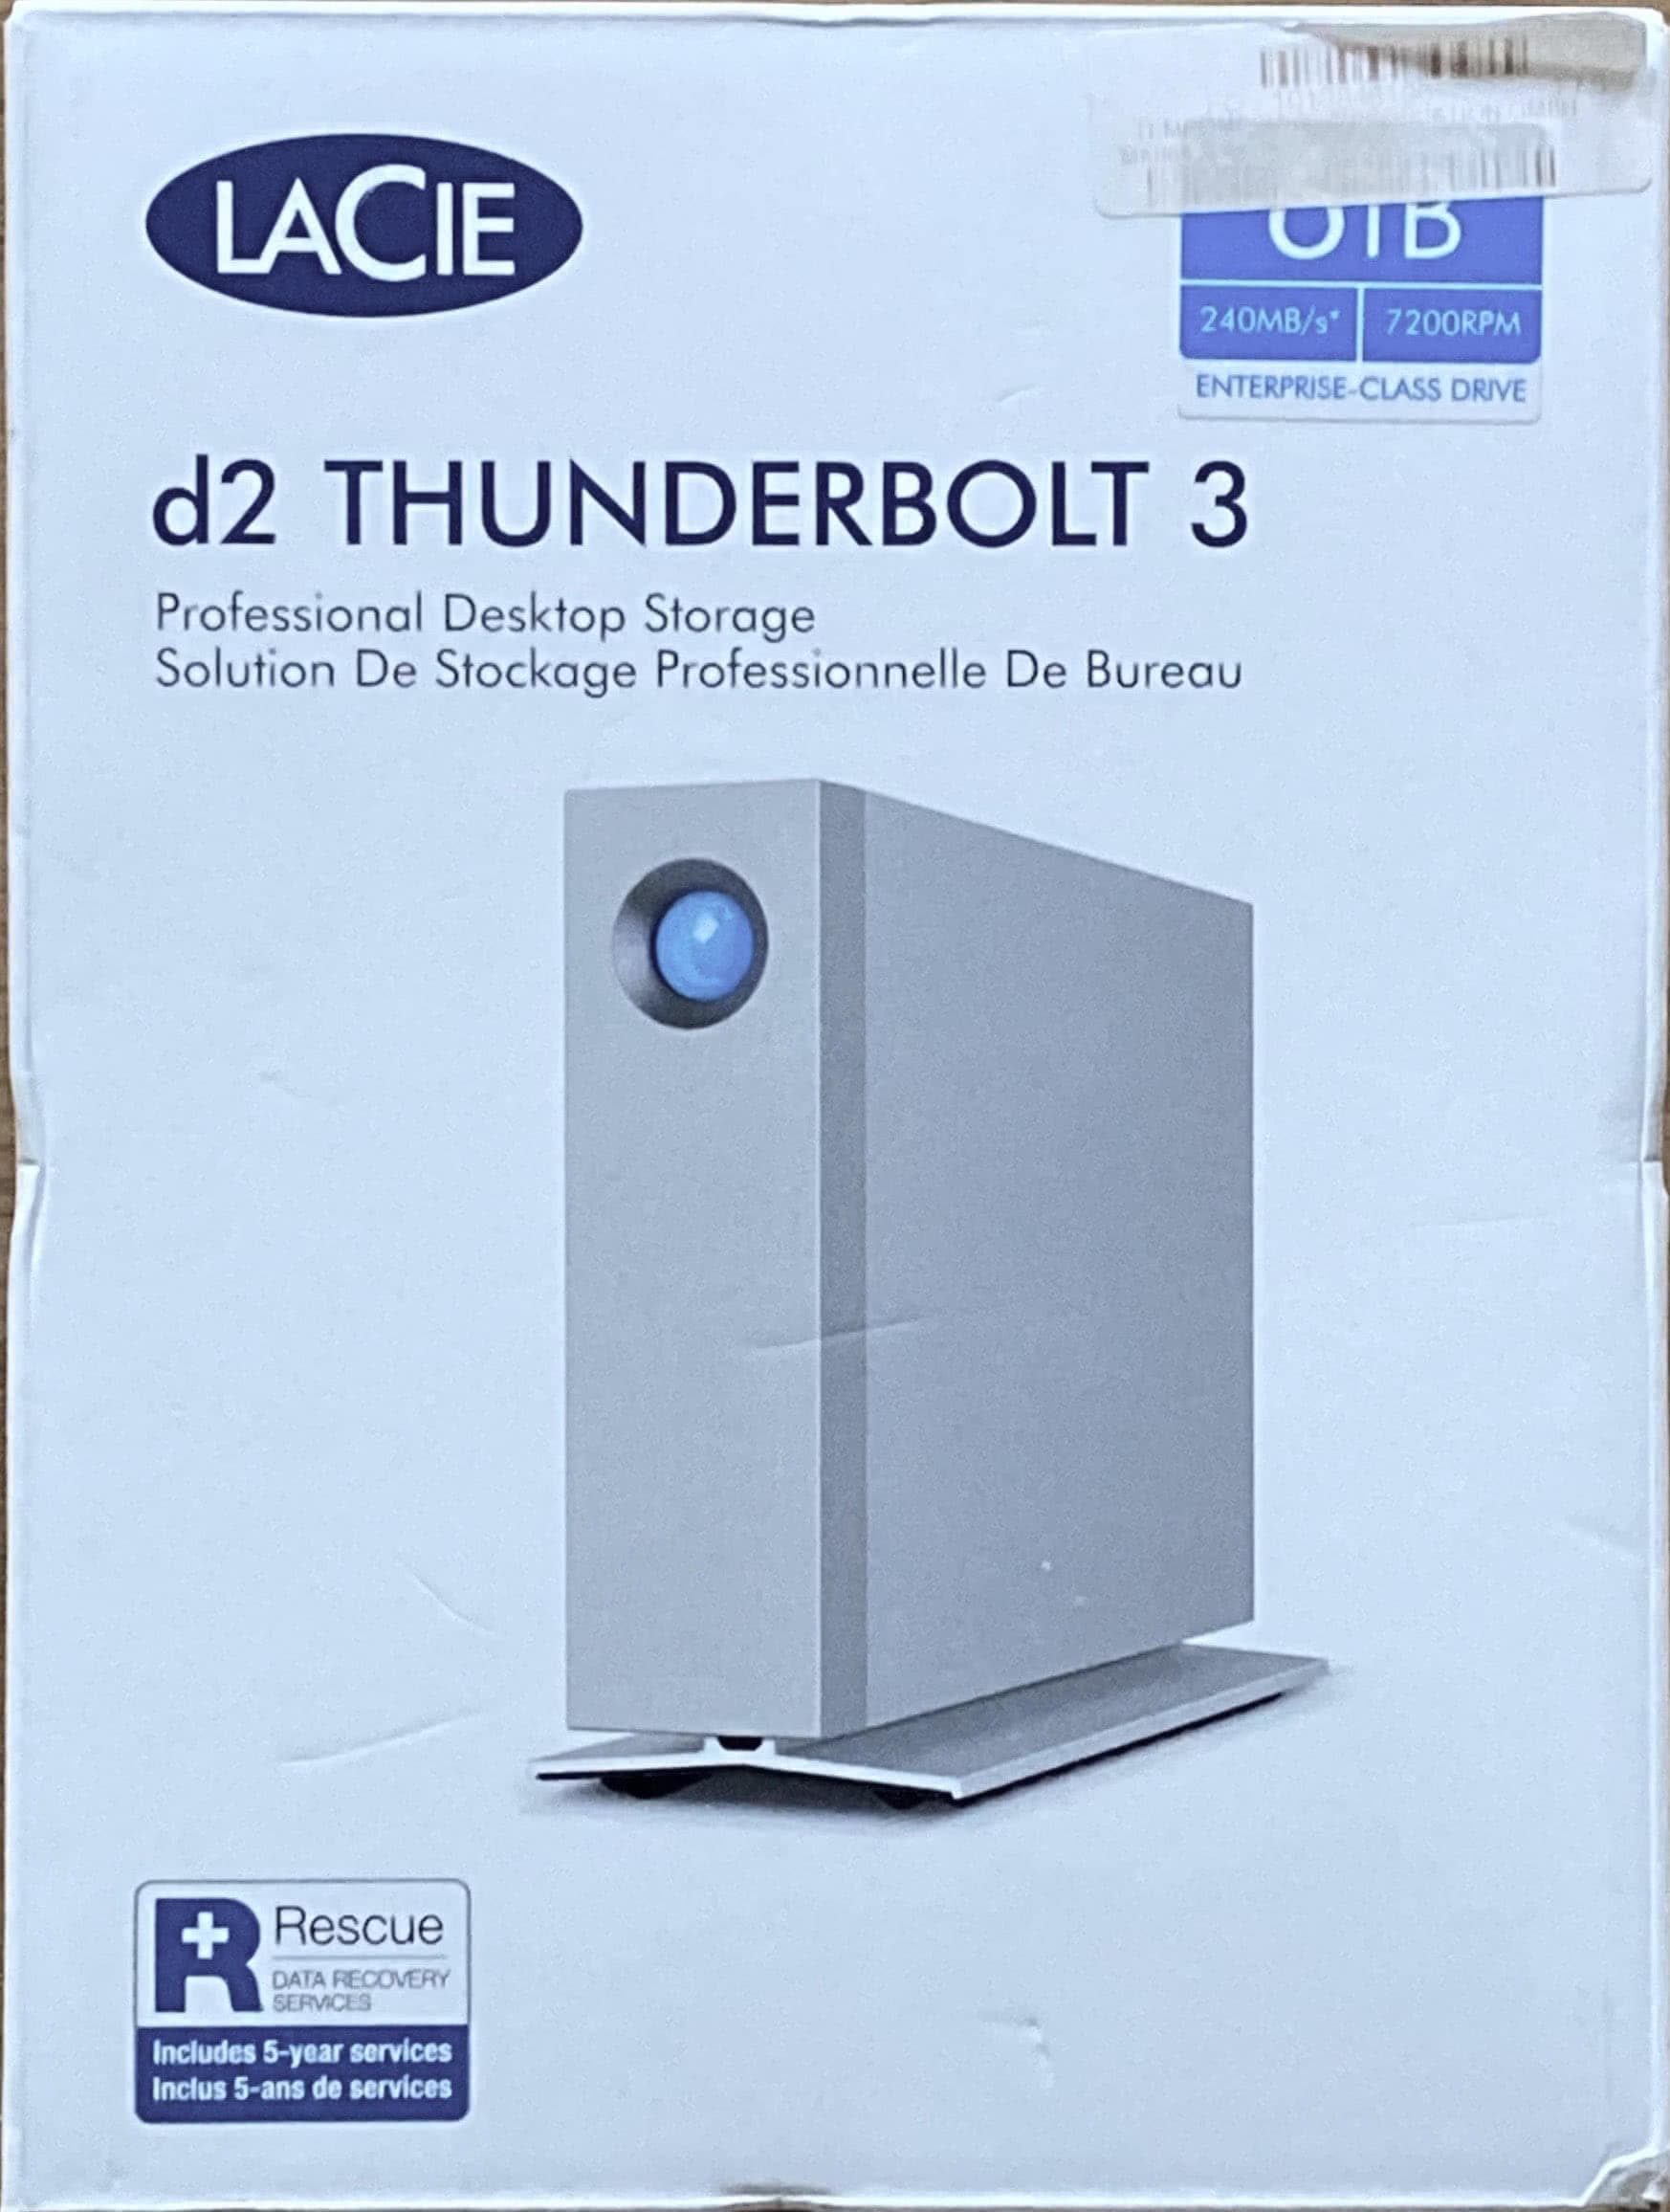 Foto: LaCie d2 Thunderbolt 3 6 TB externe Festplatte, Originalkarton Vorderseite